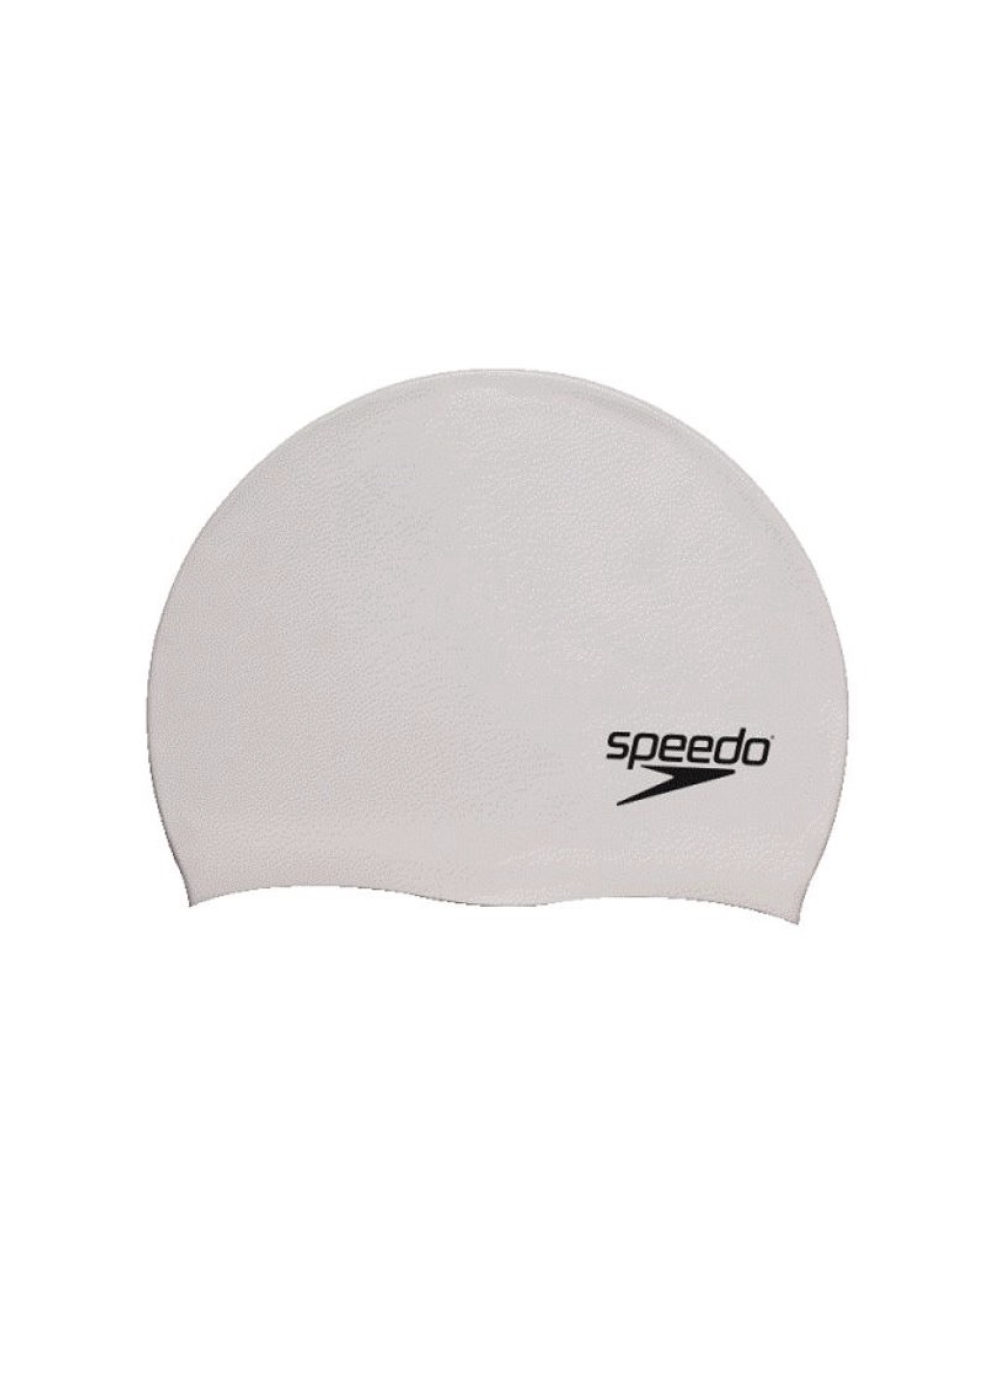 Speedo Elastomeric Cap | White